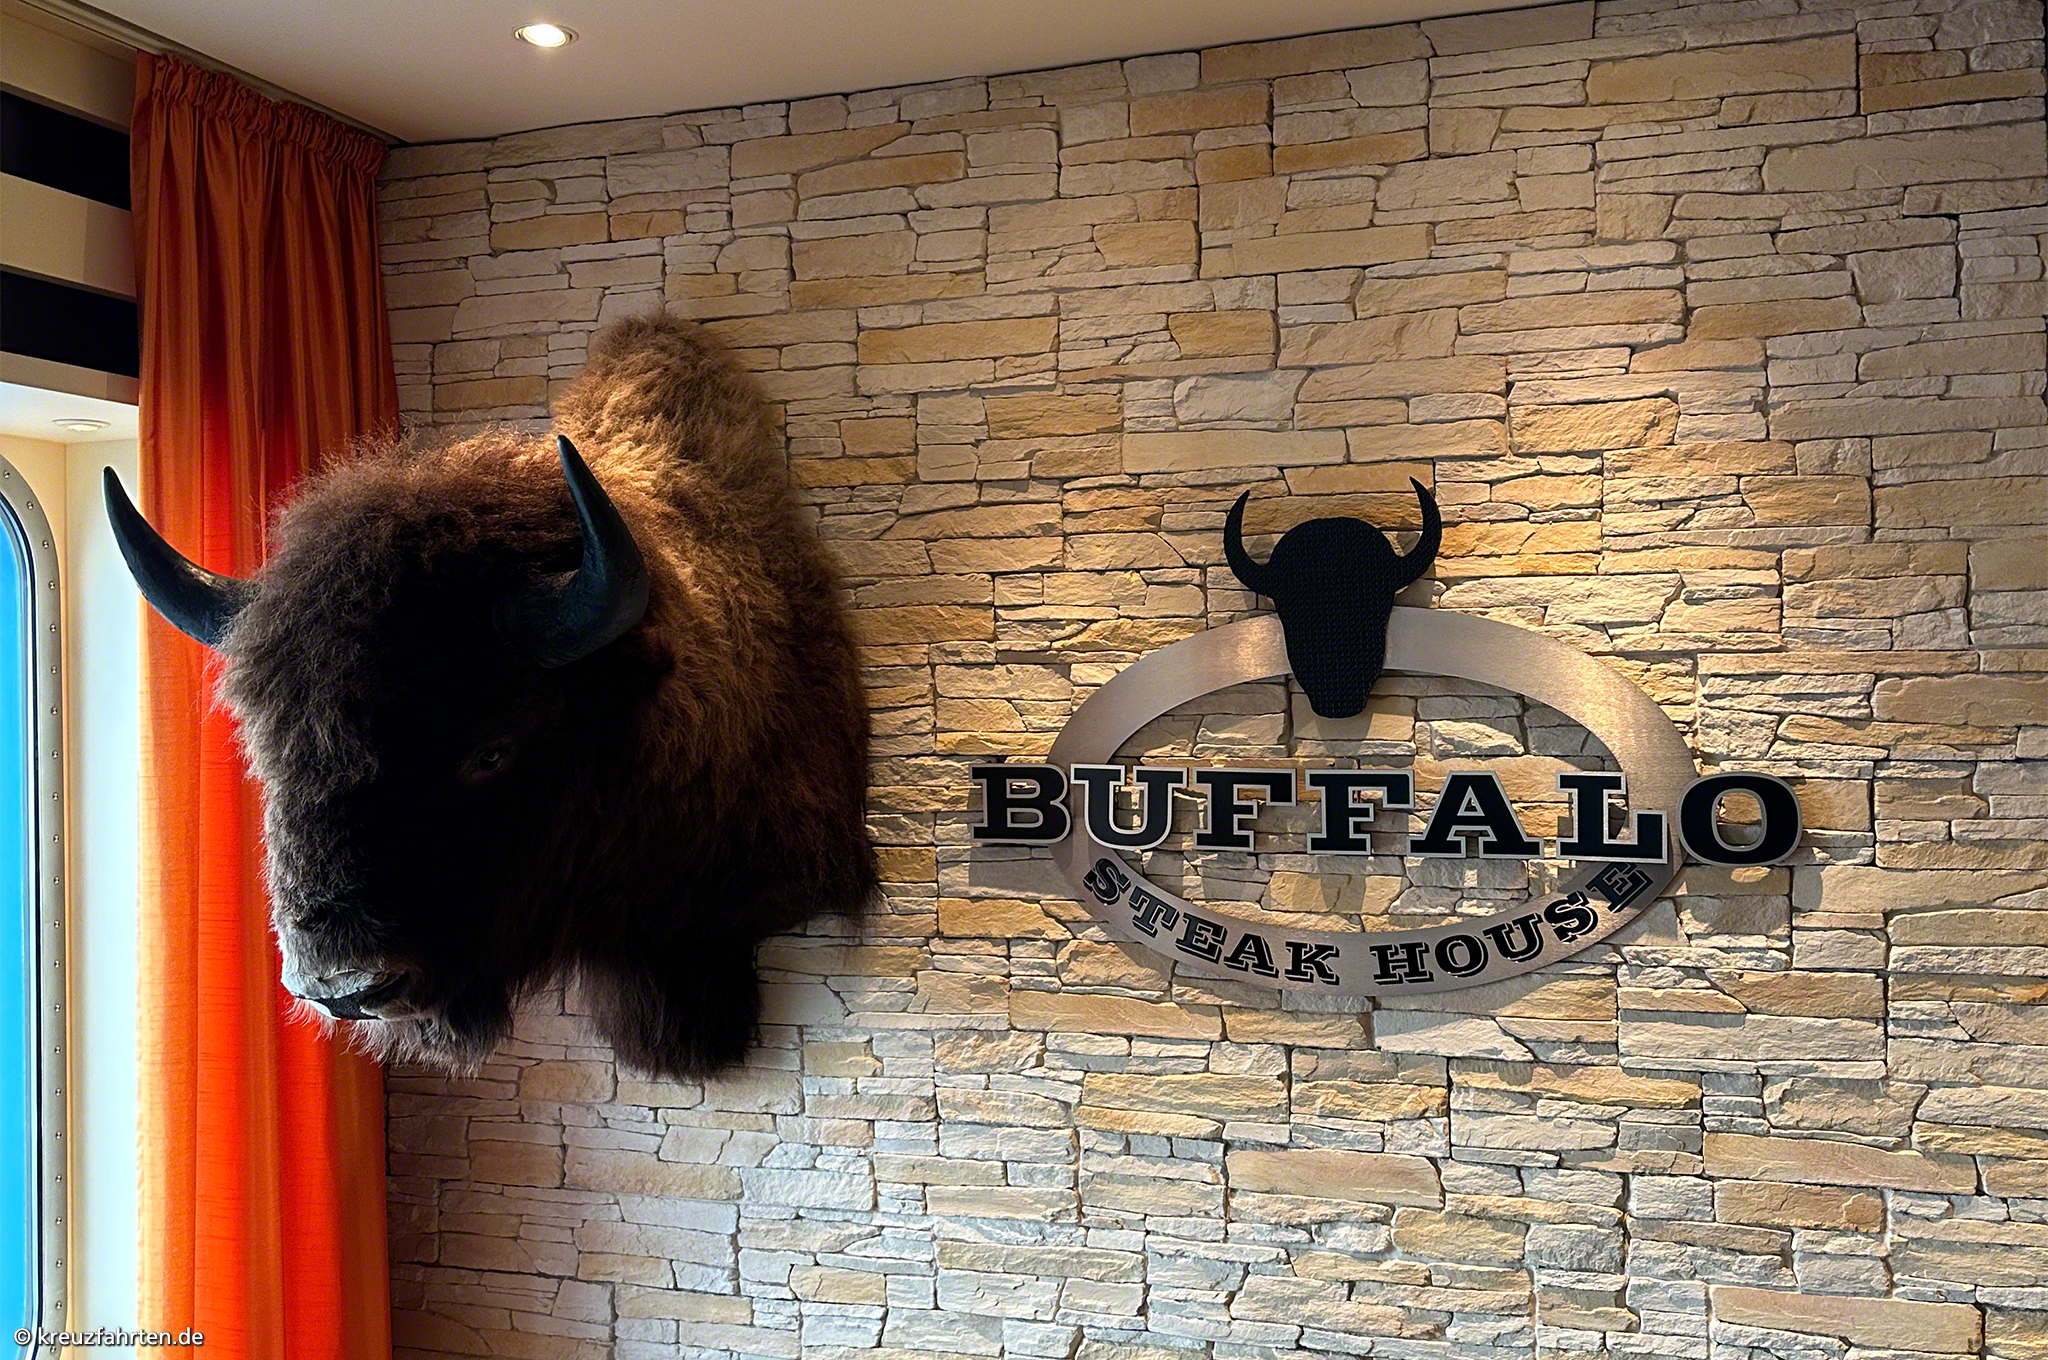 Buffallo Steak House